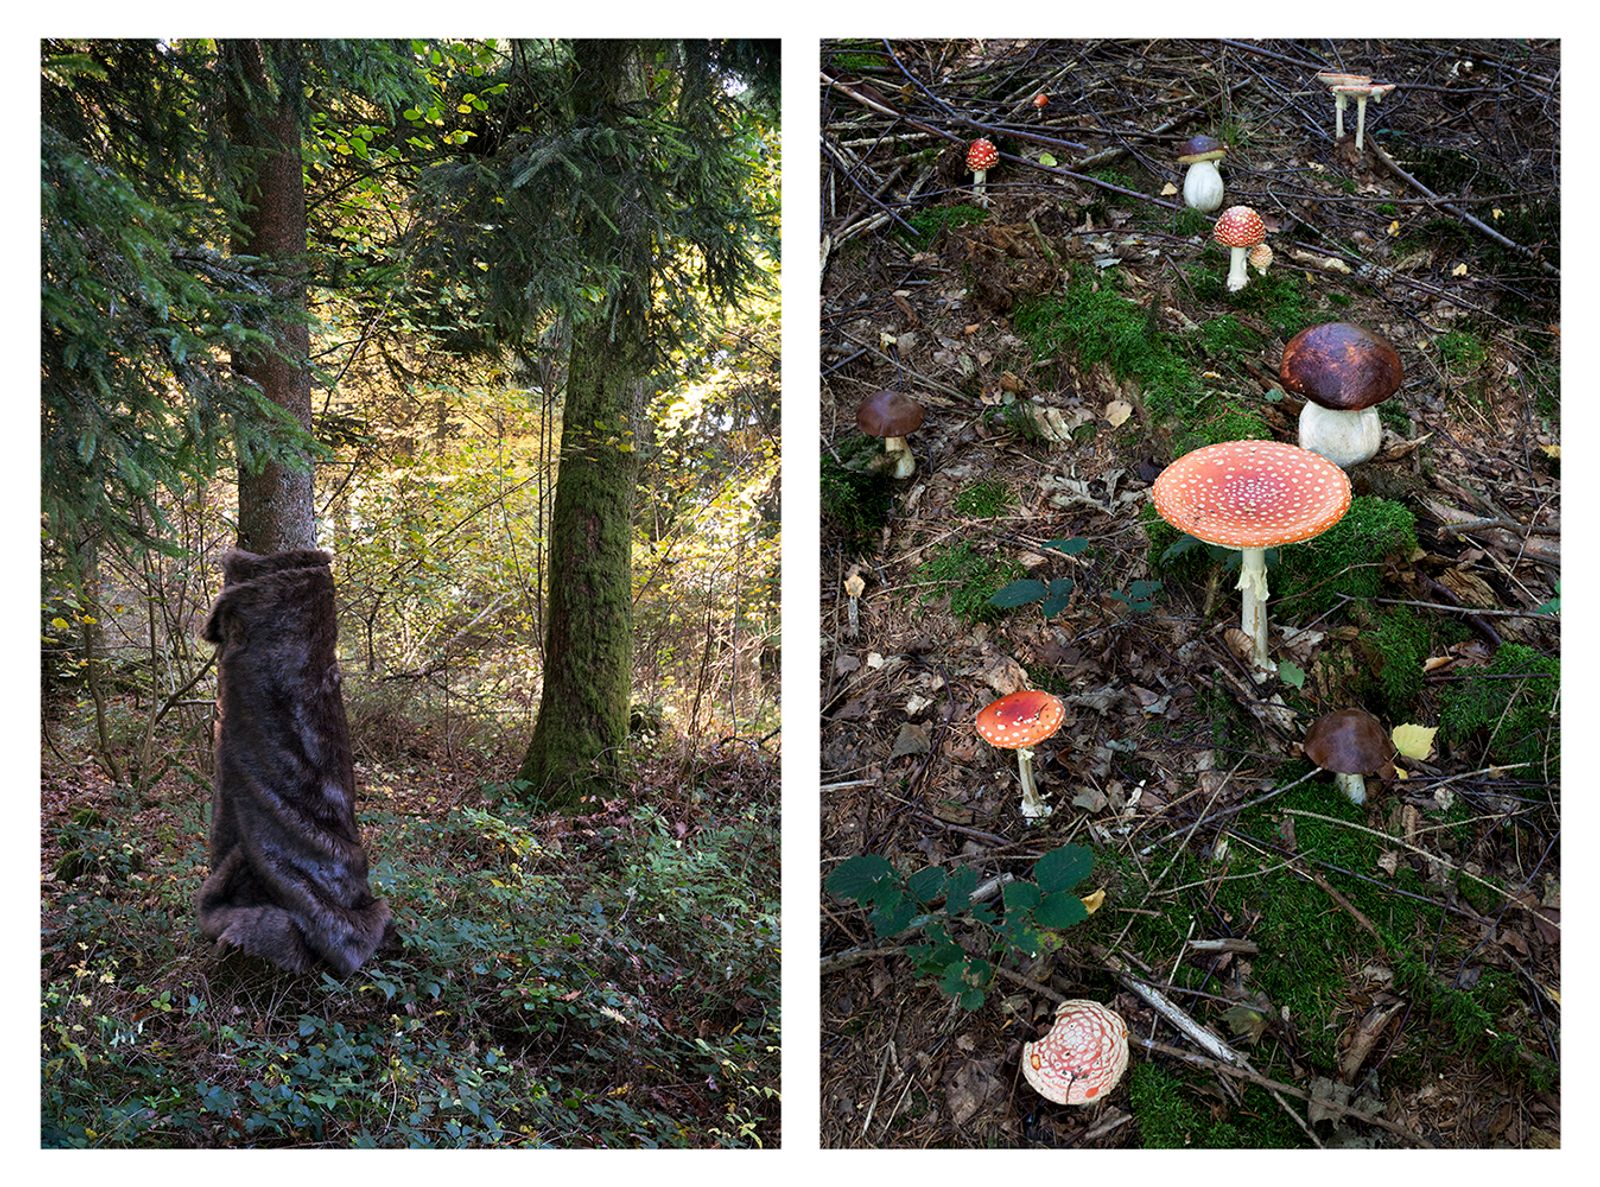 © Ute Behrend - Homage to Meret Oppenheim & poisonous mushrooms